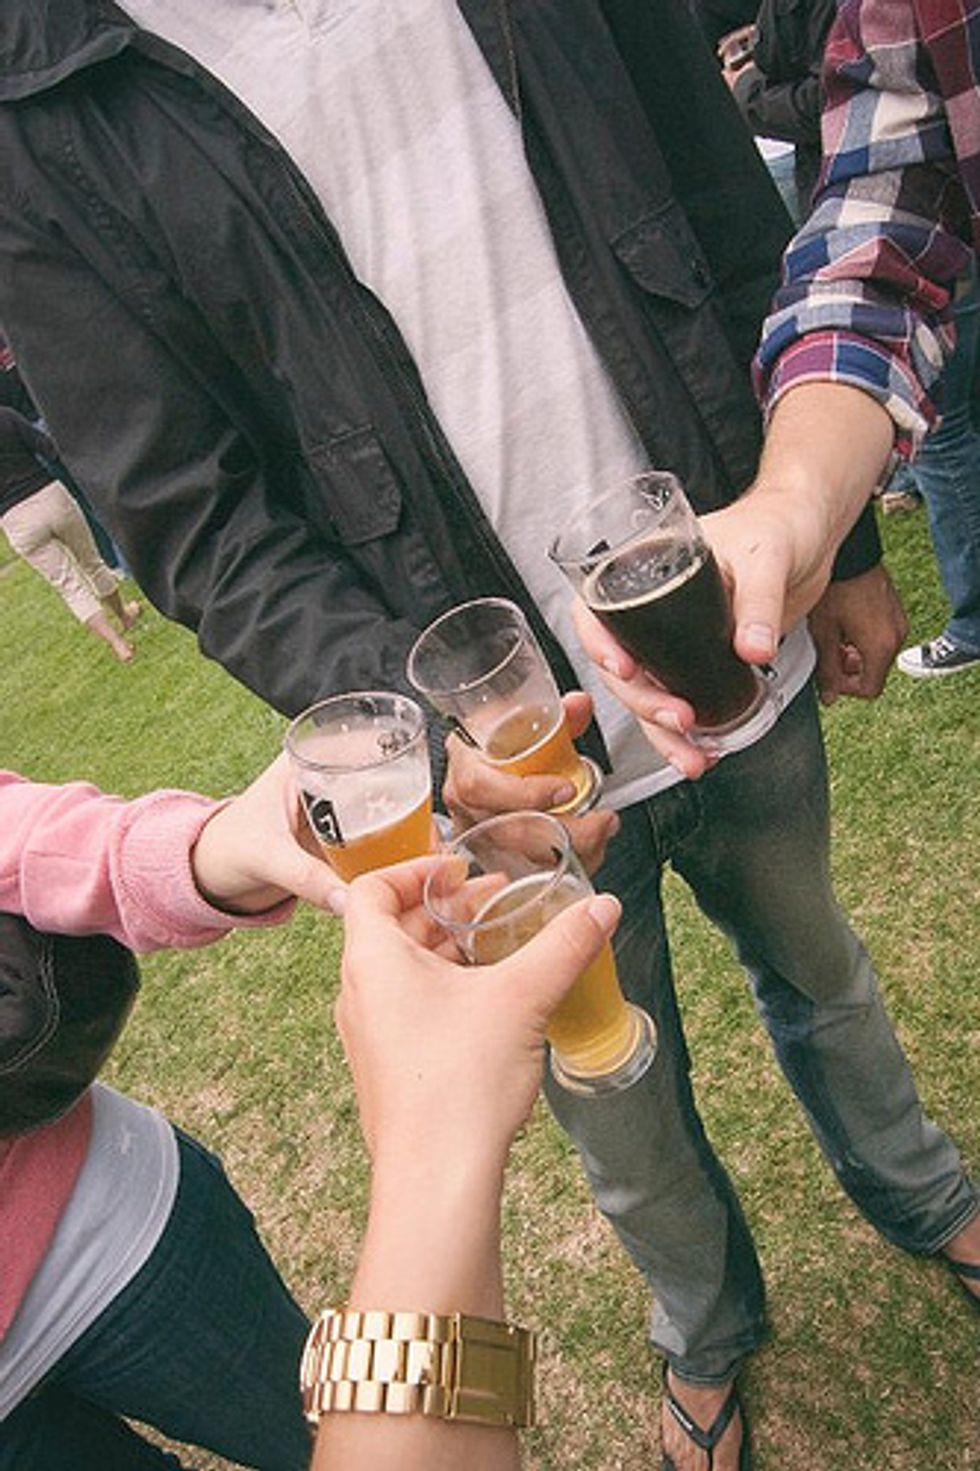 California Beer Festival Roars Into Santa Cruz This Weekend, Here's What to Drink